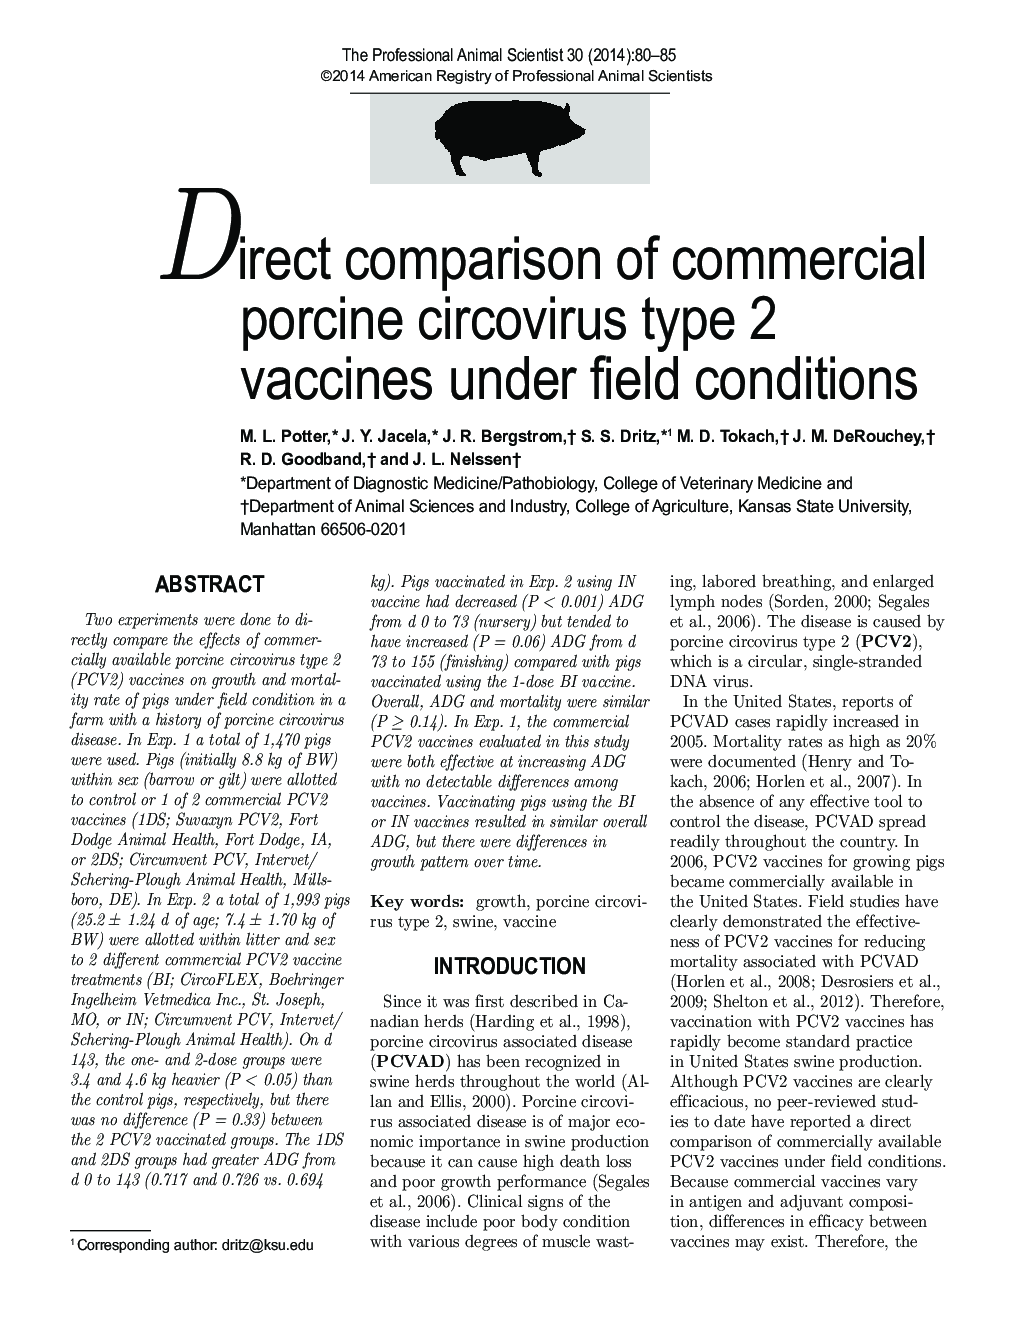 Direct comparison of commercial porcine circovirus type 2 vaccines under field conditions